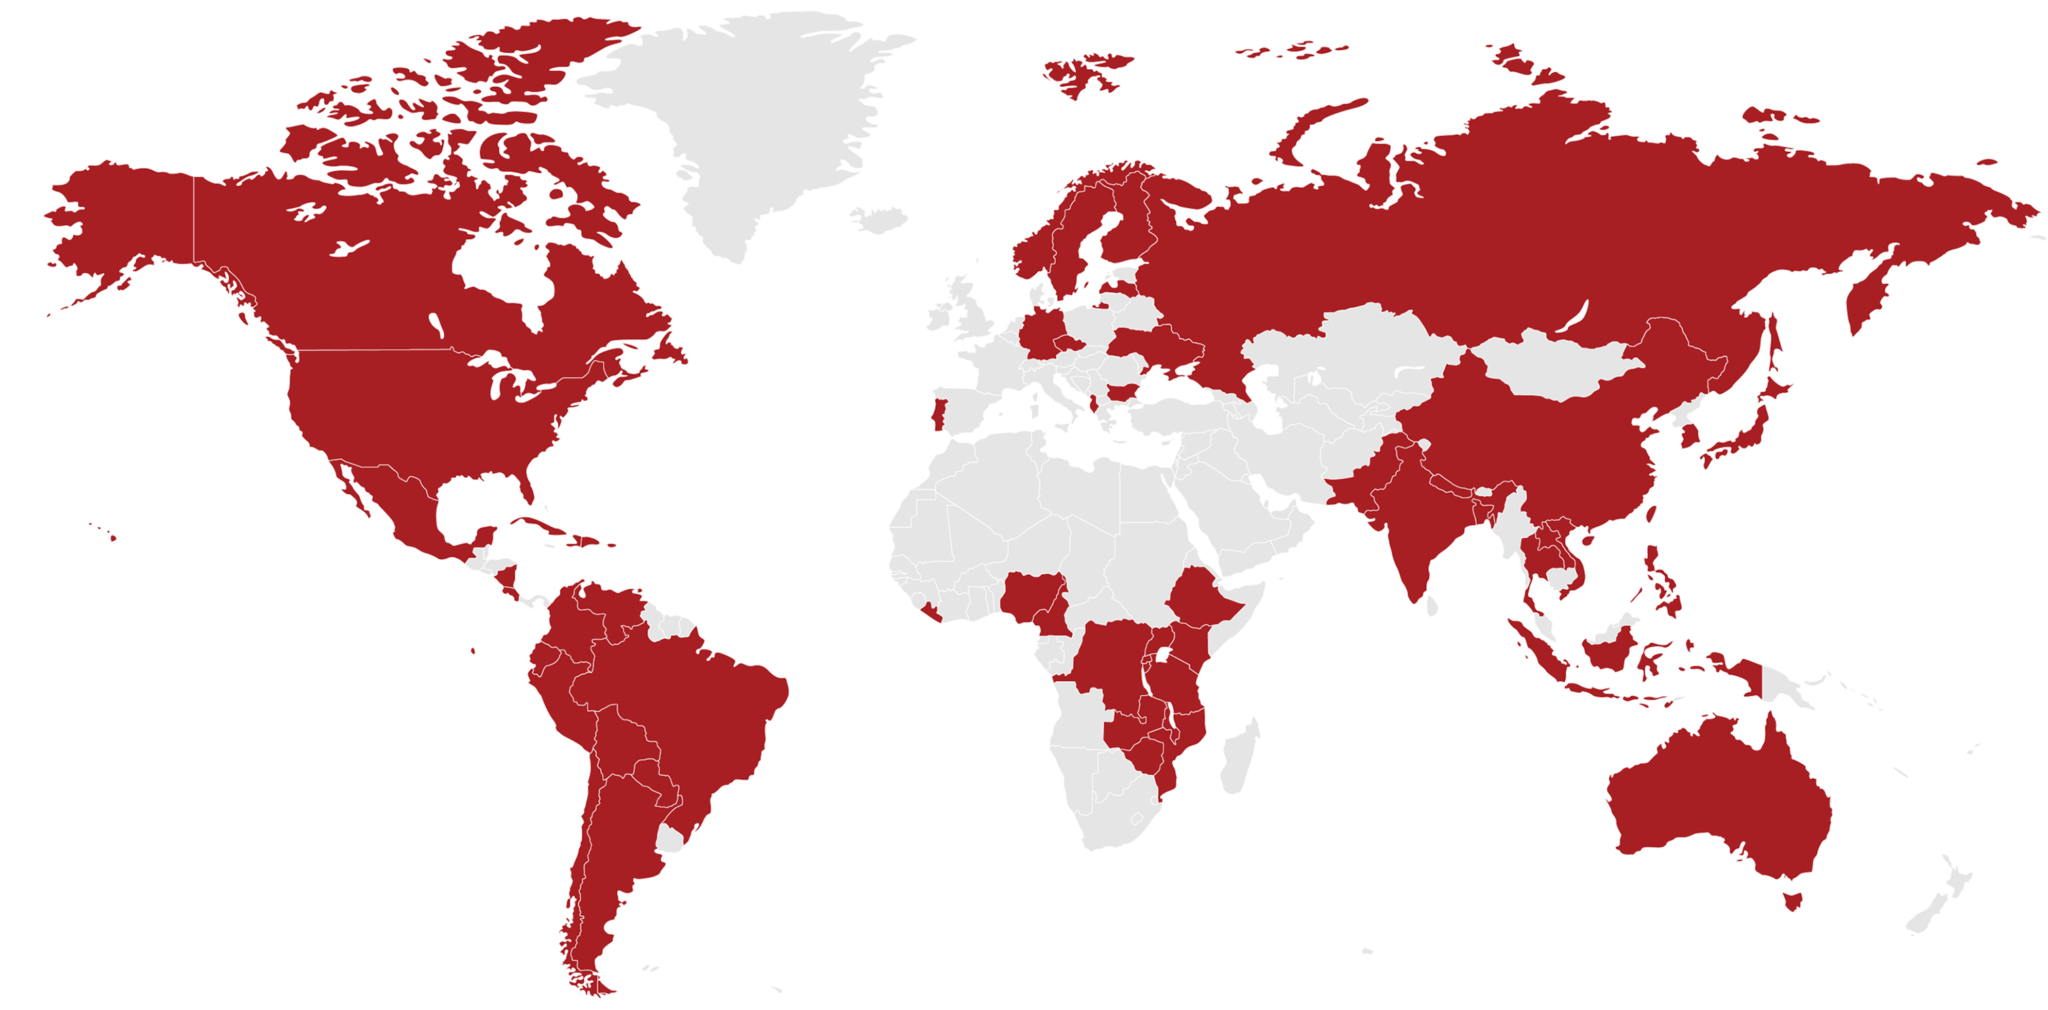 World Missions Map 2020 1 2048x1010 